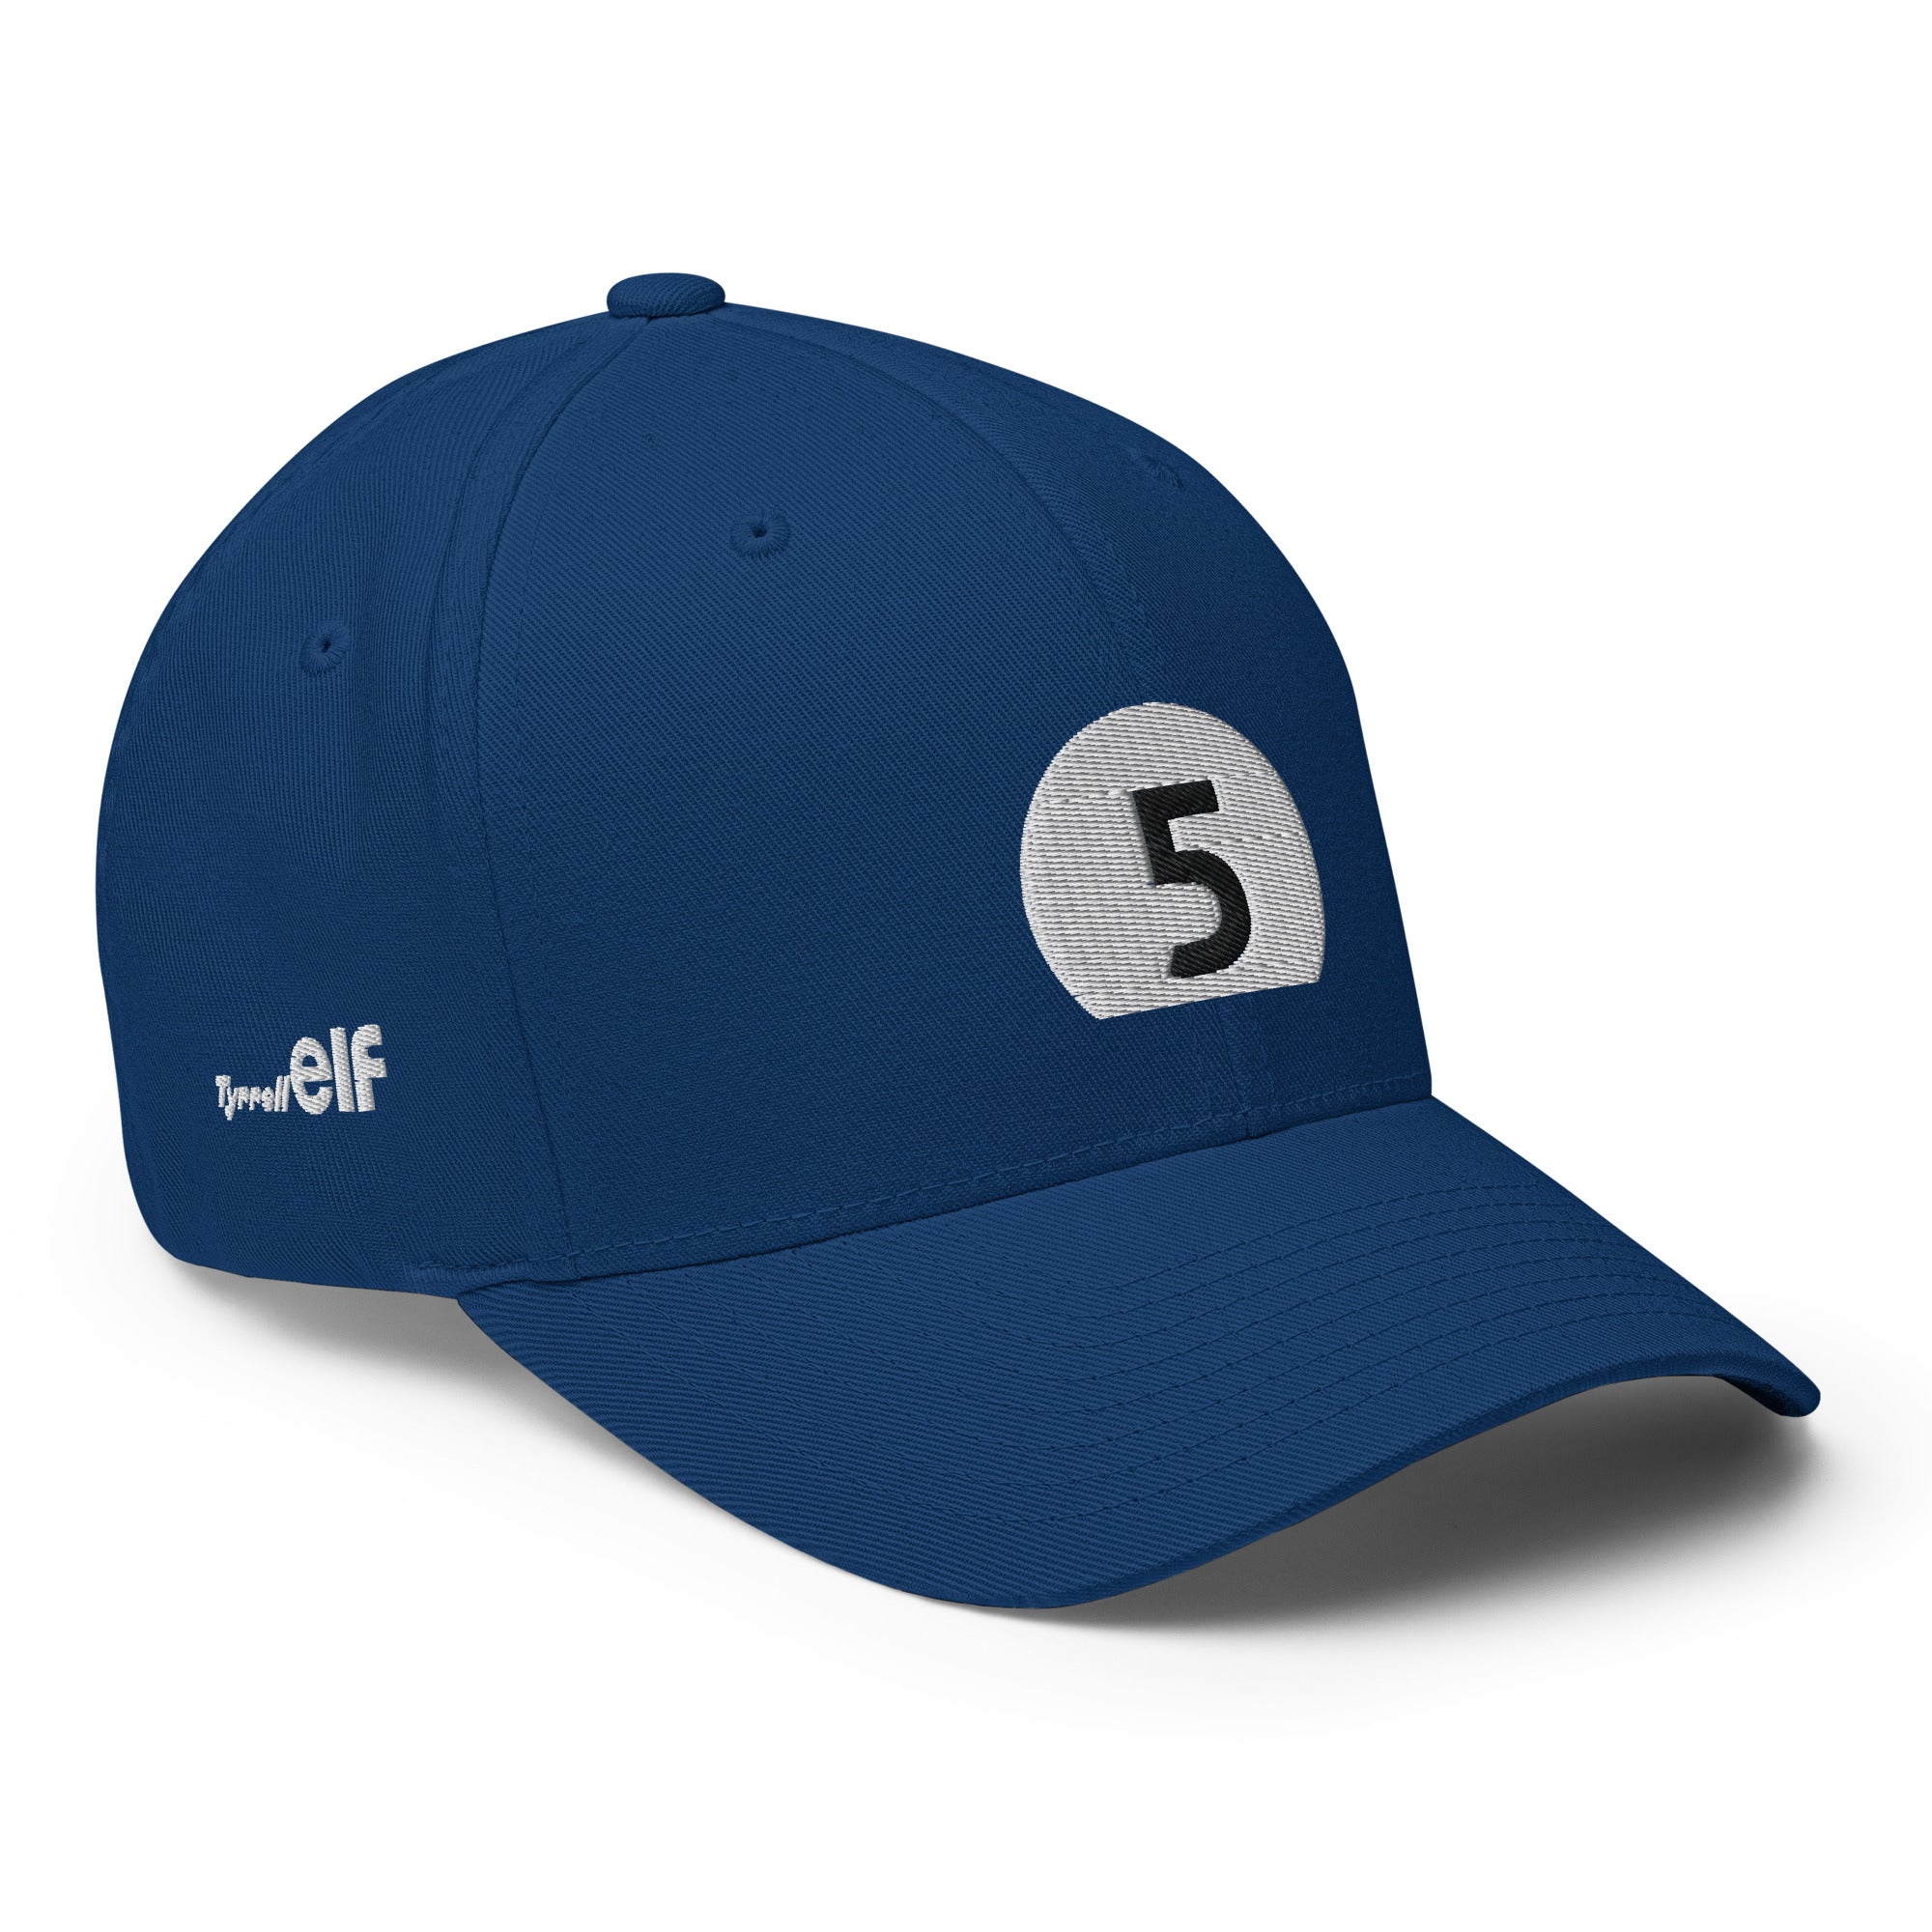 5: Elf Tyrrell Ford Racing - Jackie Stewart Blue cap left front side